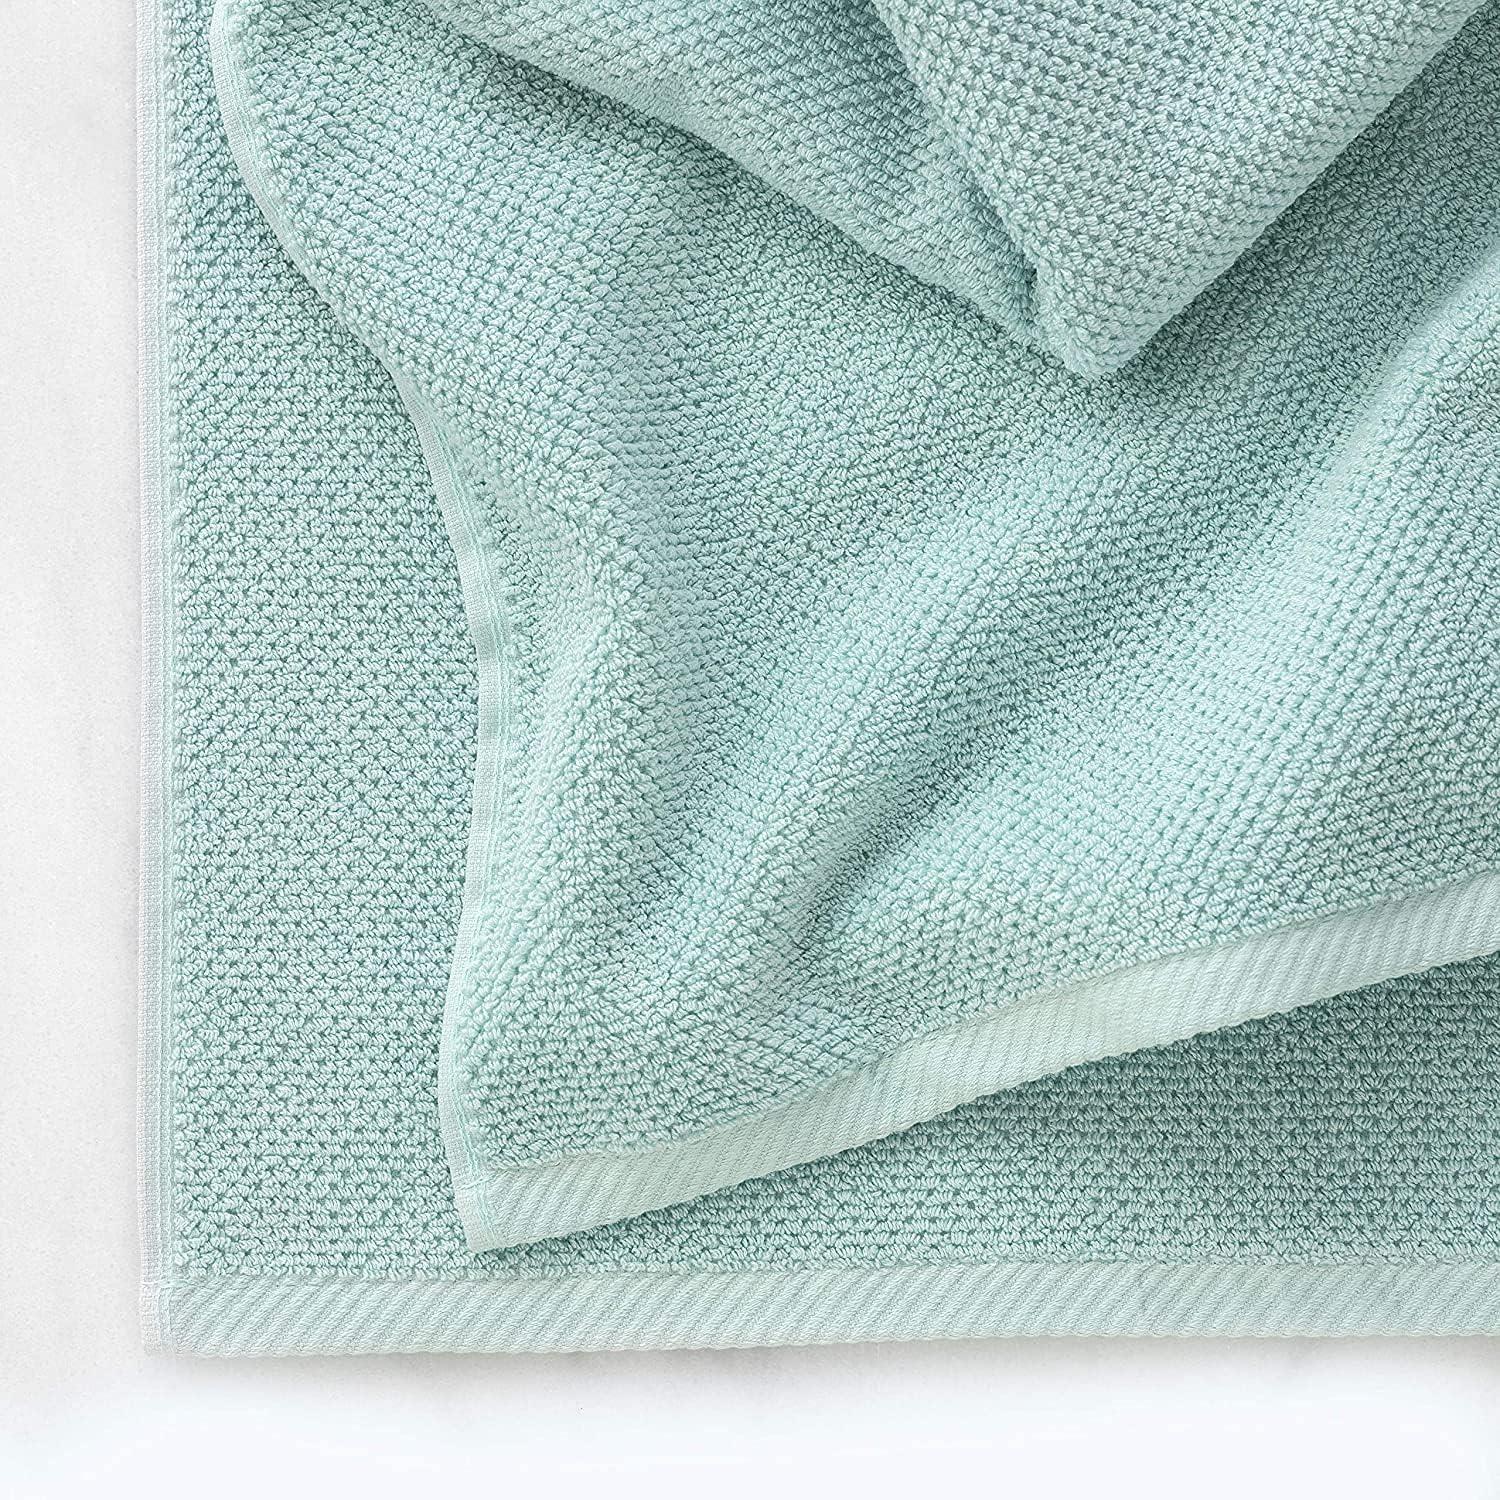 Welspun 4-piece Organic Hand & Washcloth Towel Set